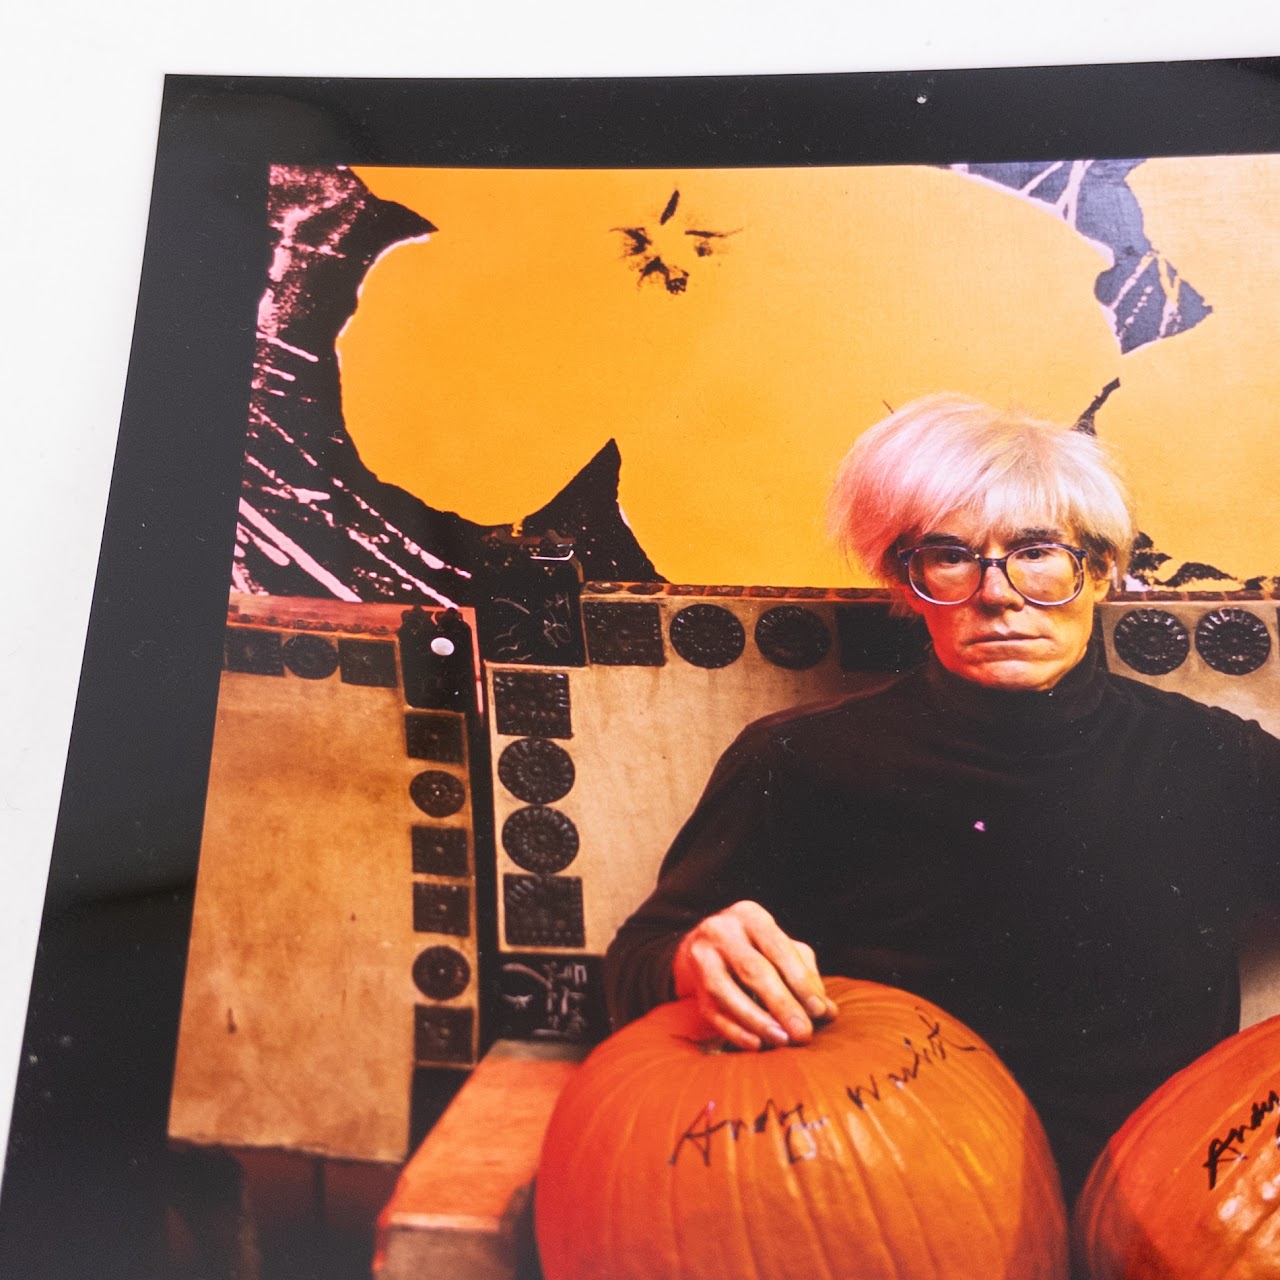 Mario Ruiz  " Andy Warhol with Pumpkins" Photograph